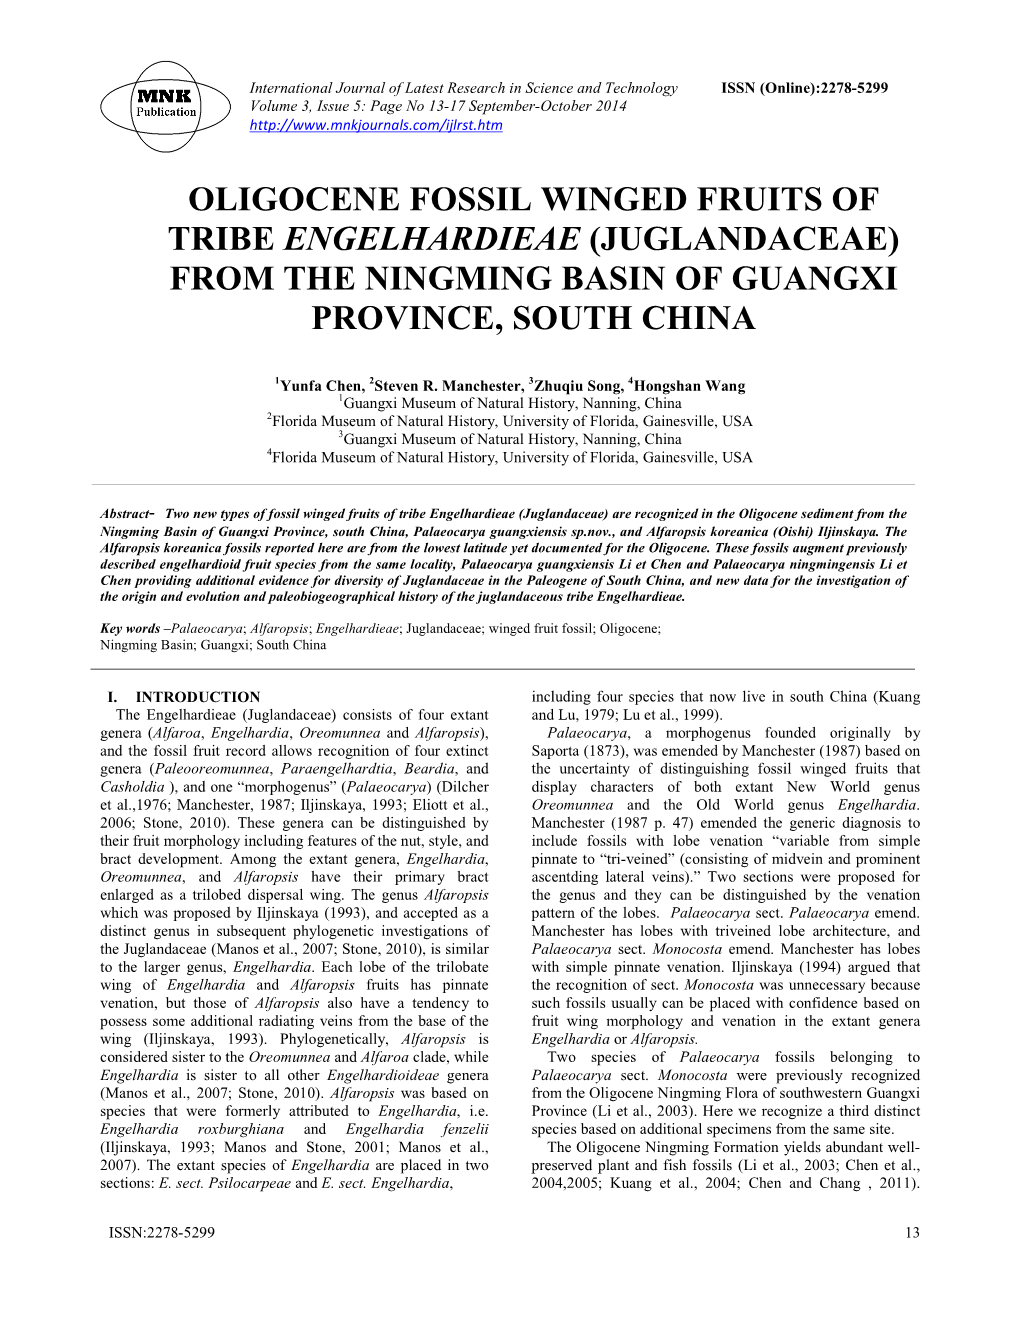 Oligocene Fossil Winged Fruits of Tribe Engelhardieae (Juglandaceae) from the Ningming Basin of Guangxi Province, South China